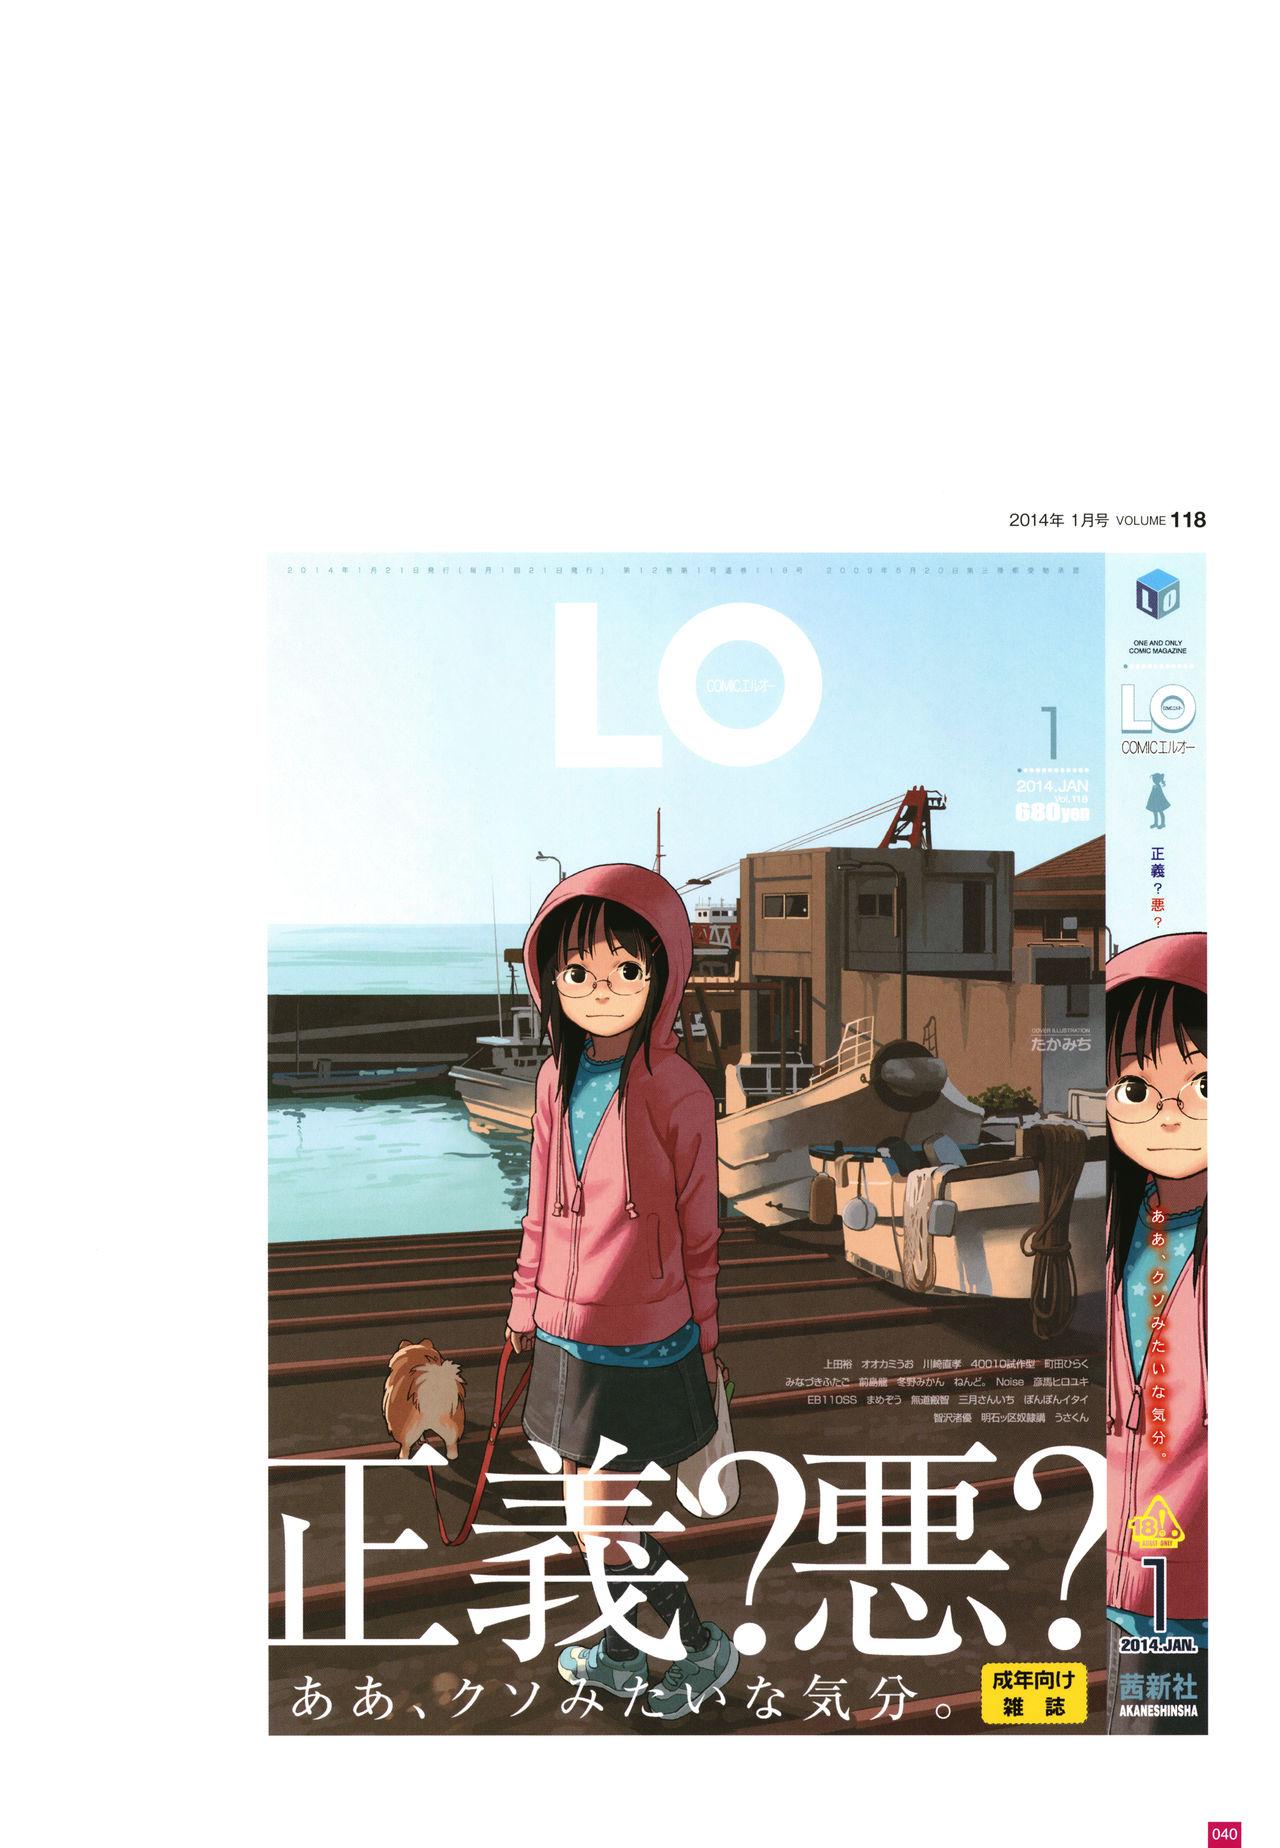 [Takamichi] LO Artbook 2-B TAKAMICHI LO-fi WORKS 42